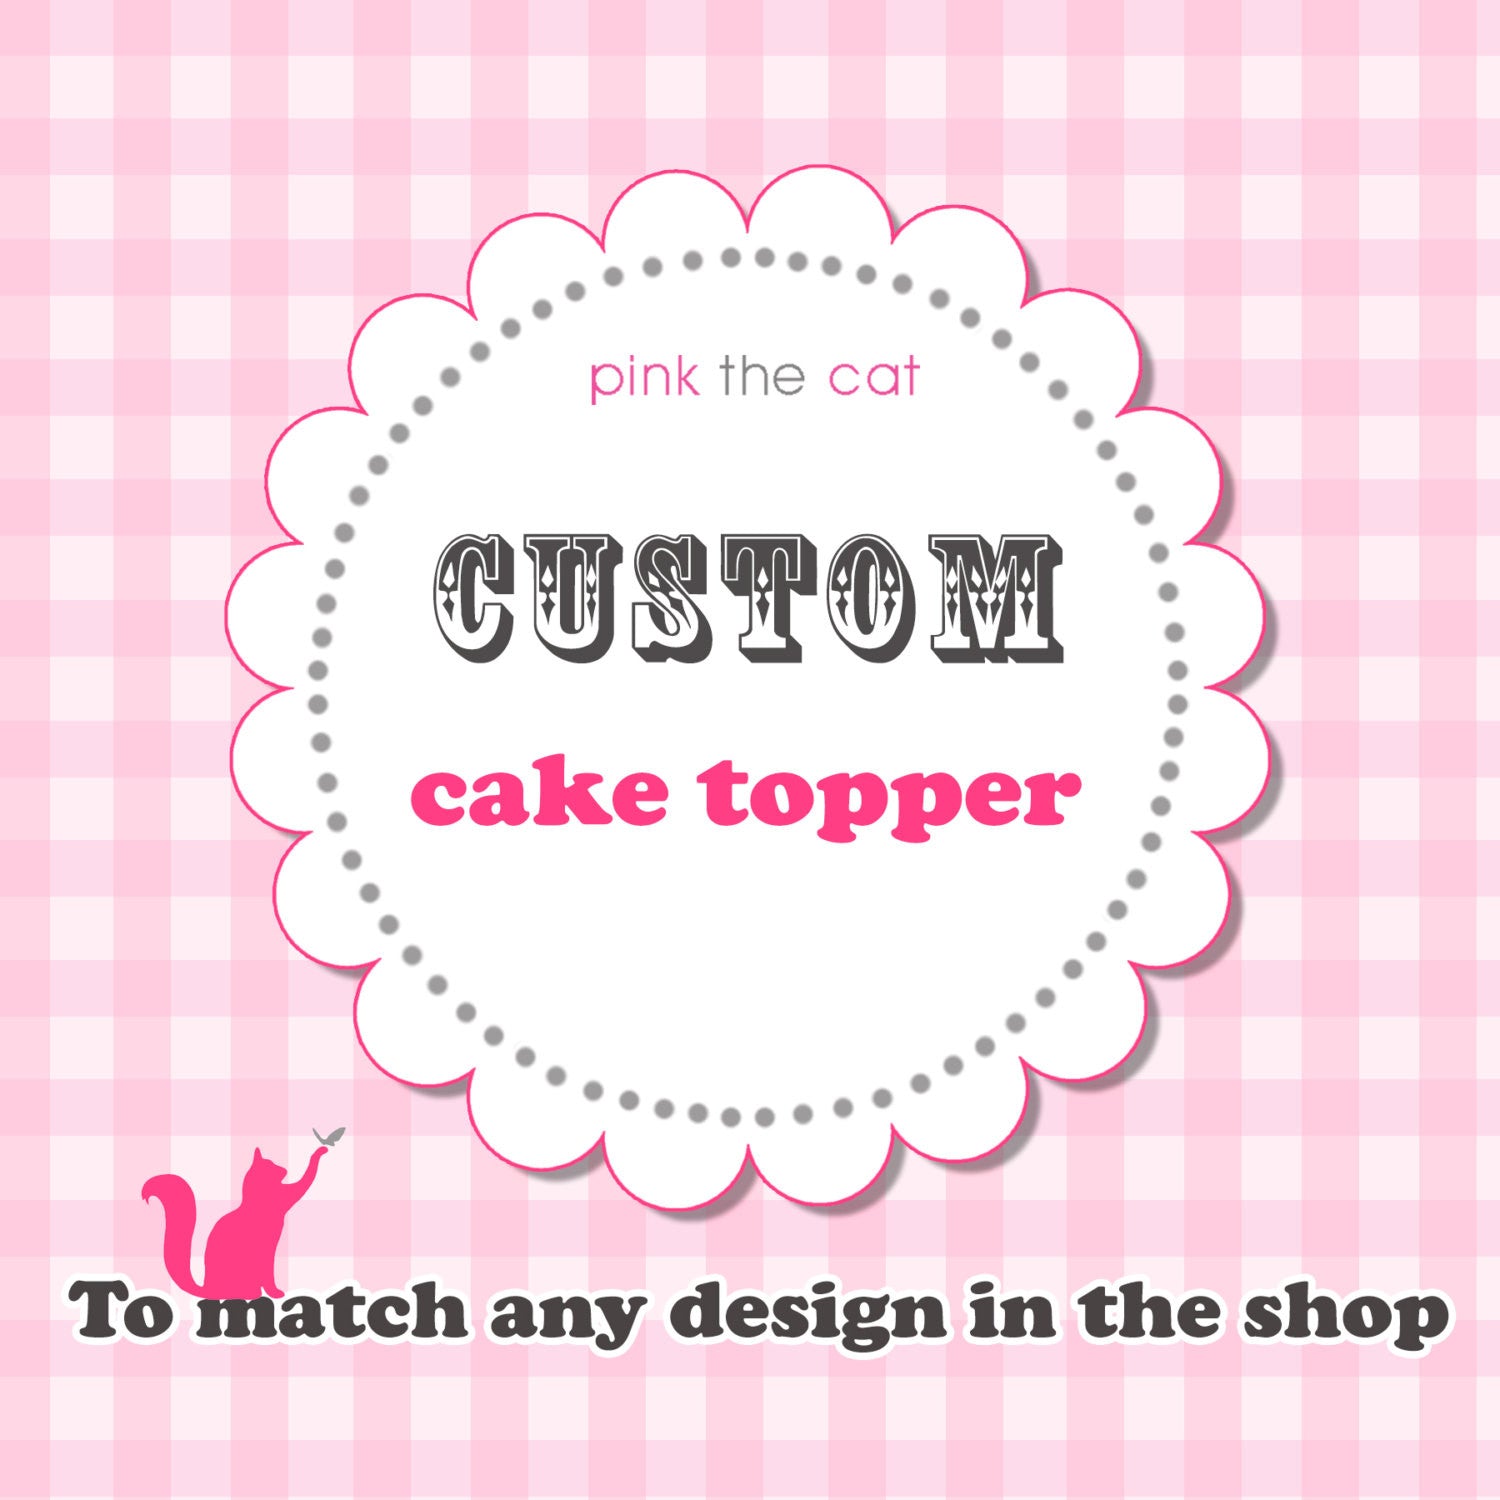 cake topper